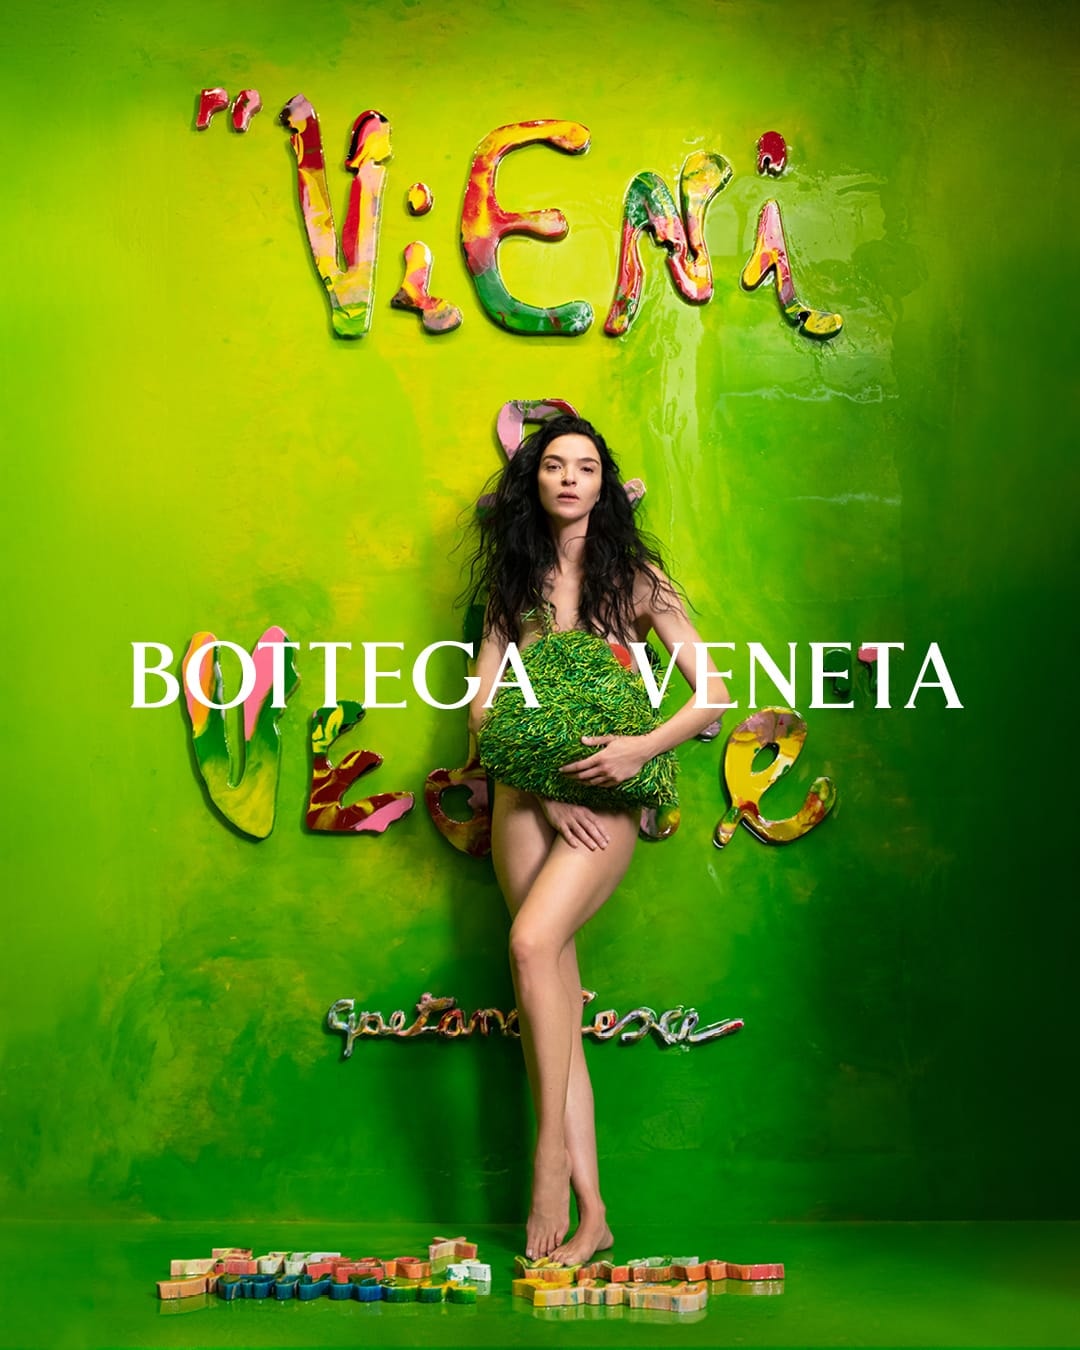 Bottega Veneta 携手 Gaetano Pesce 展出「Vieni a Vedere」最新装置艺术